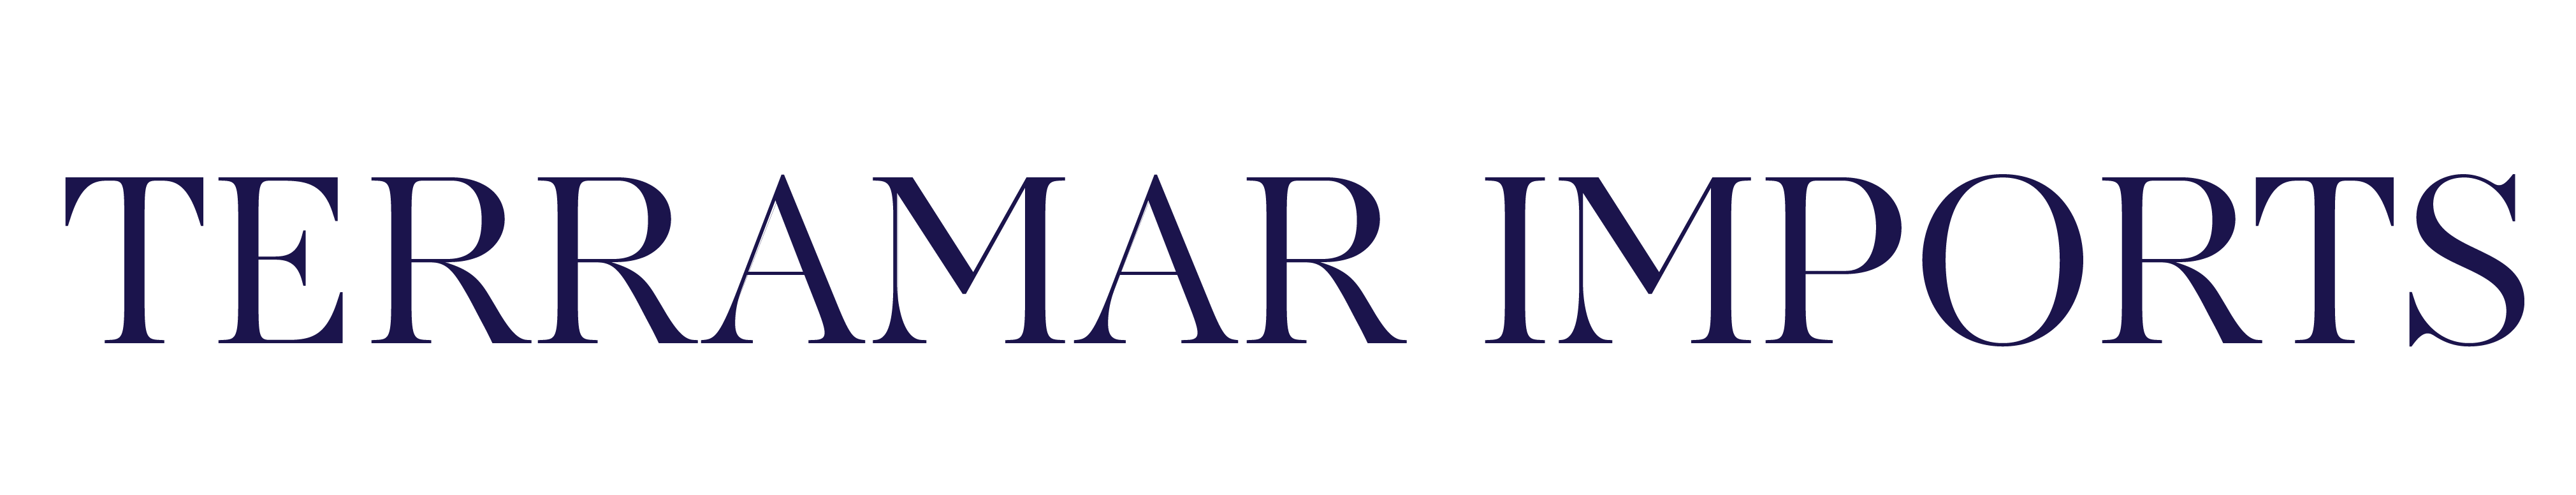 Terramar Imports Logo